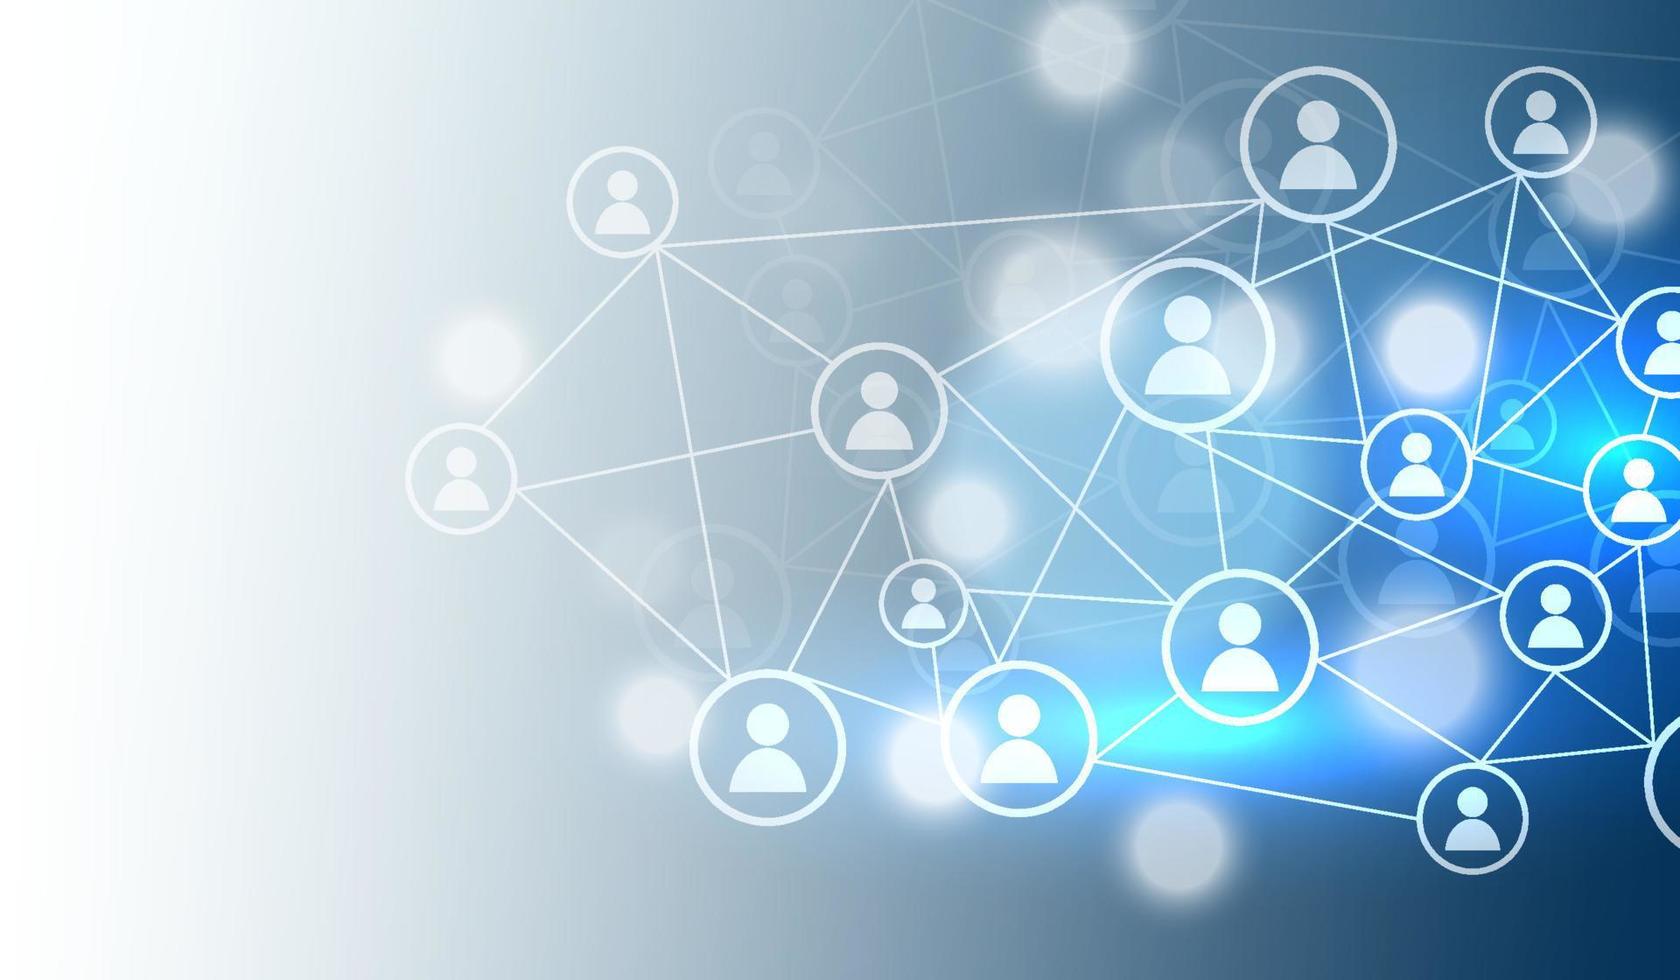 social network connection concept blue background vector